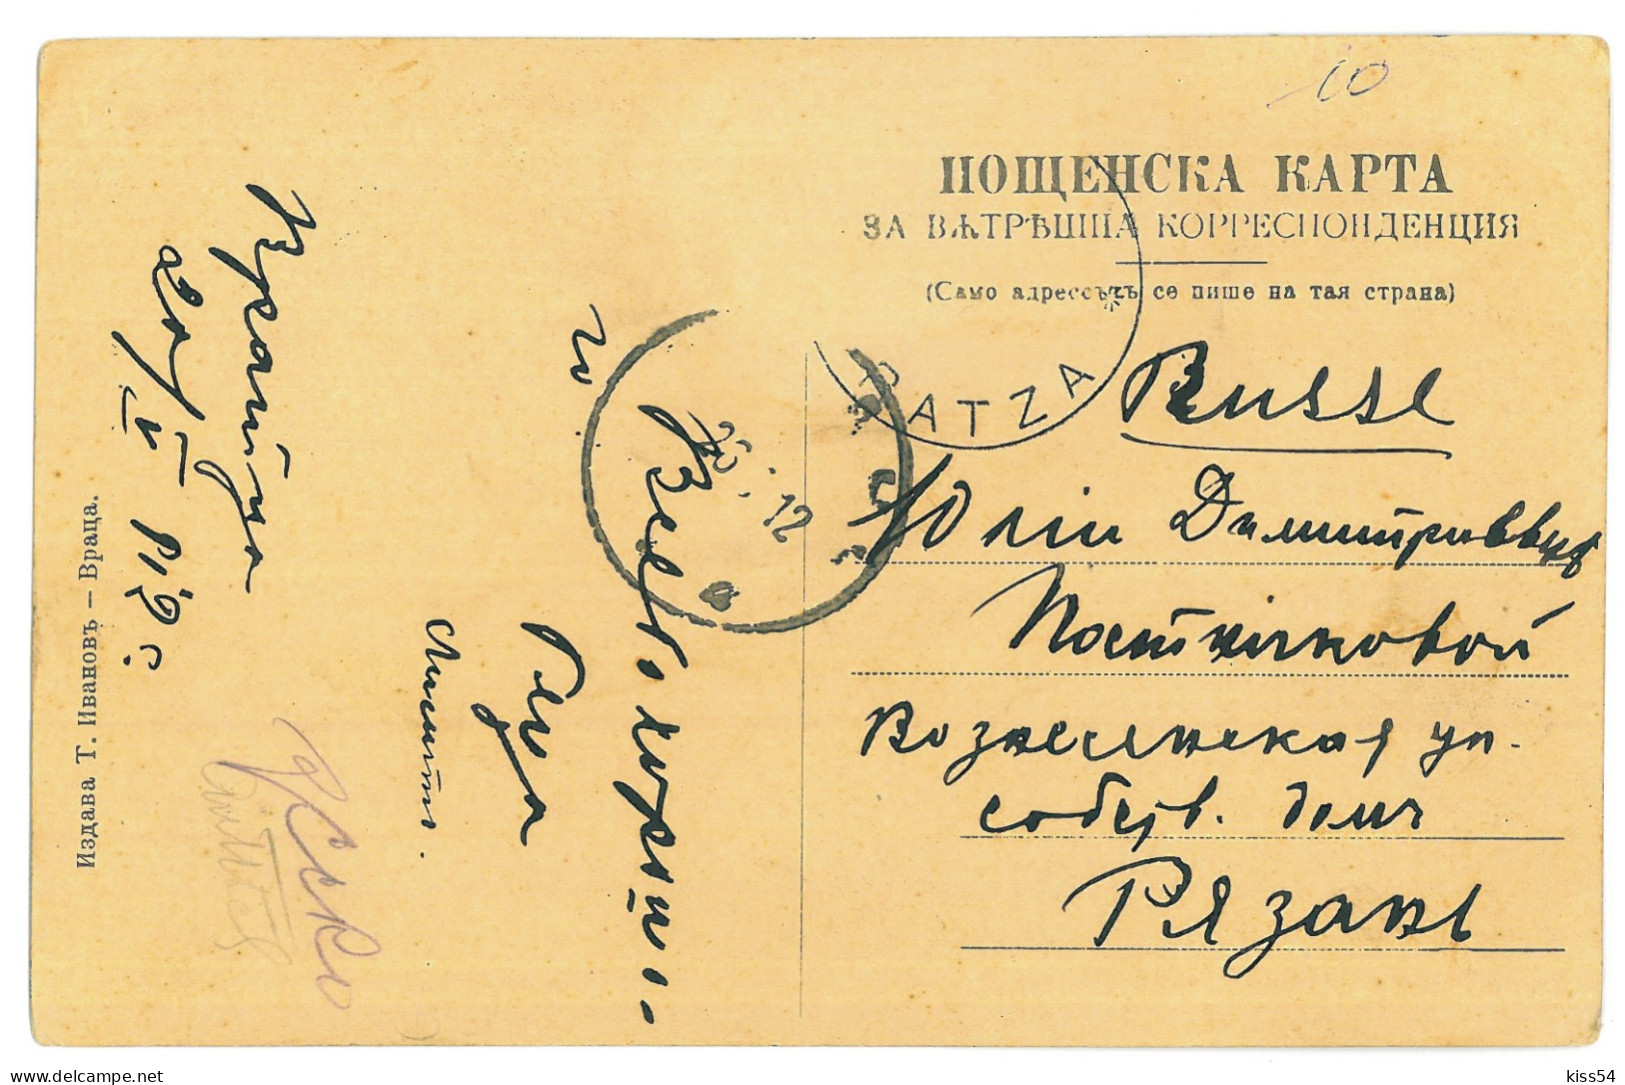 BUL 08 - 23478 VRATA PASS, Balkan Mountain, Bulgaria - Old Postcard - Used - 1912 - Bulgaria